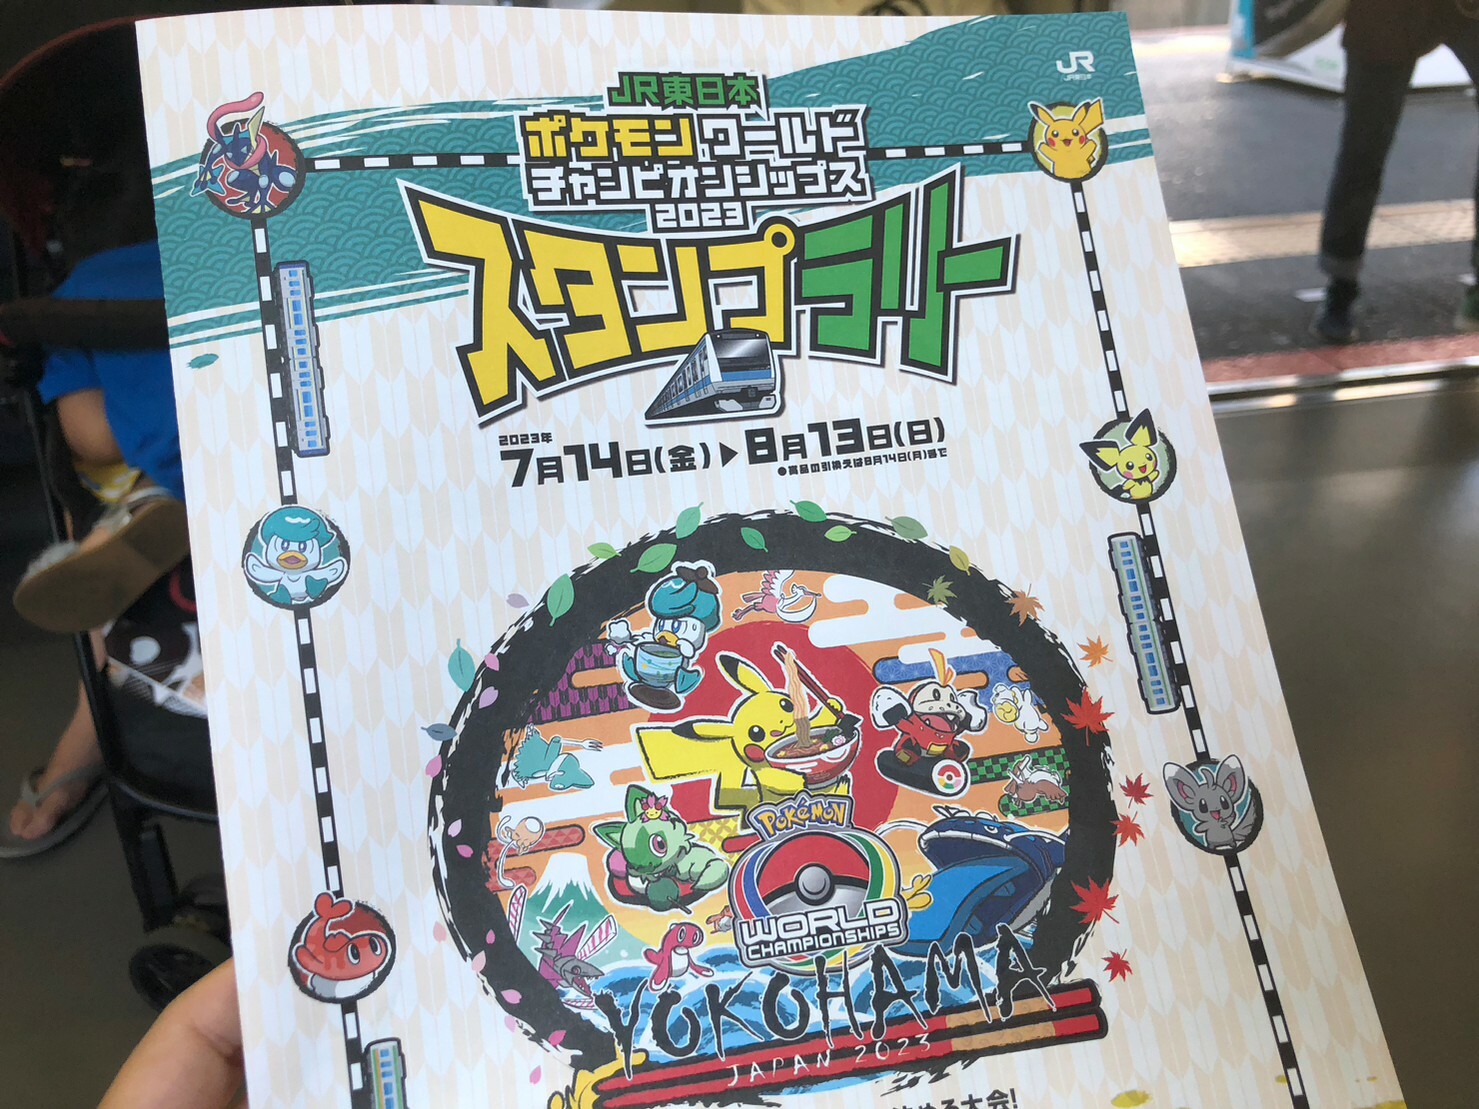 JR東日本では、ポケモンのスタンプラリーも開催中です